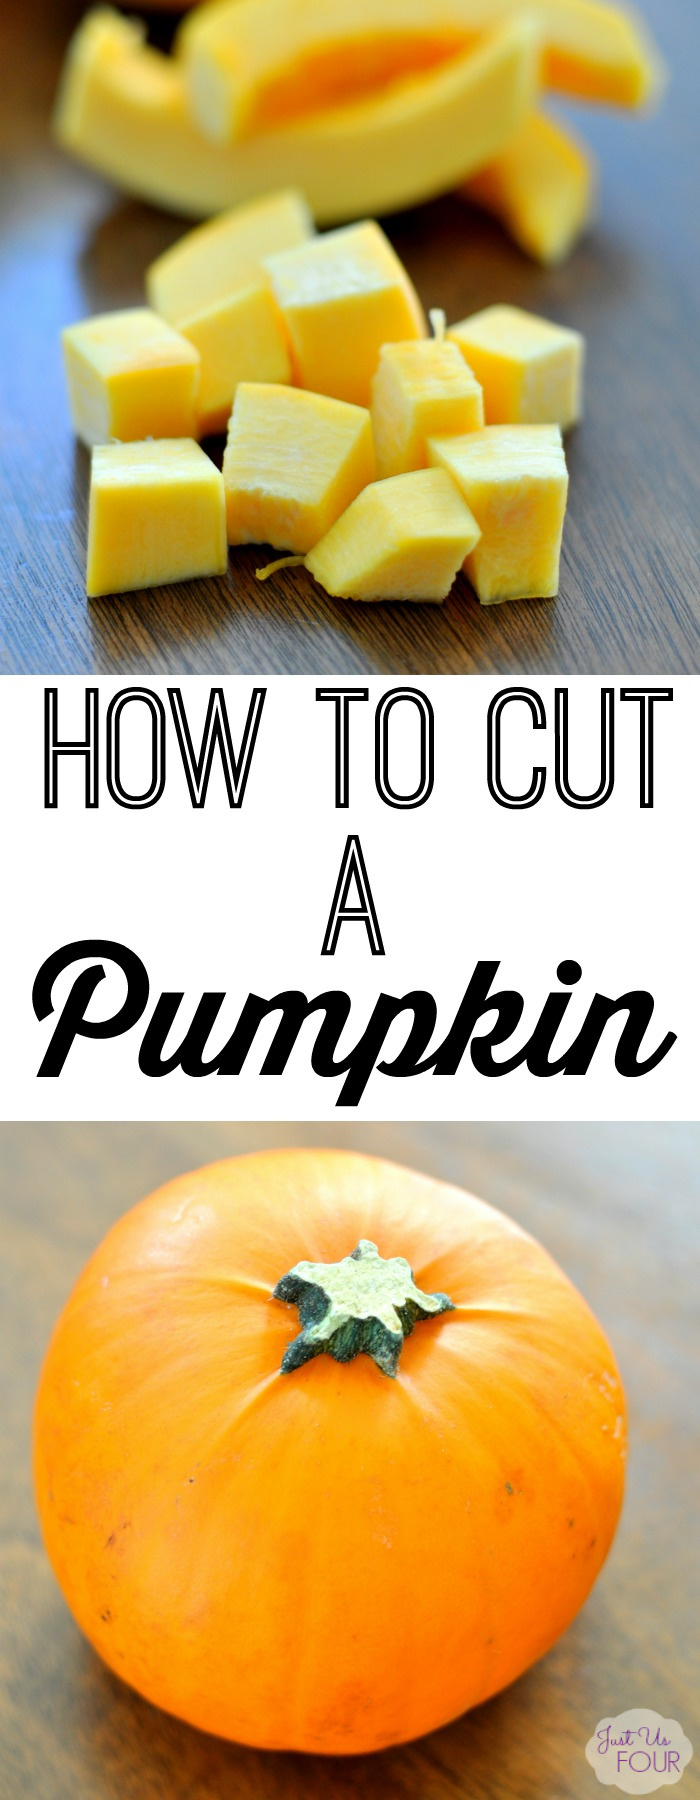 How to Cut a Pumpkin